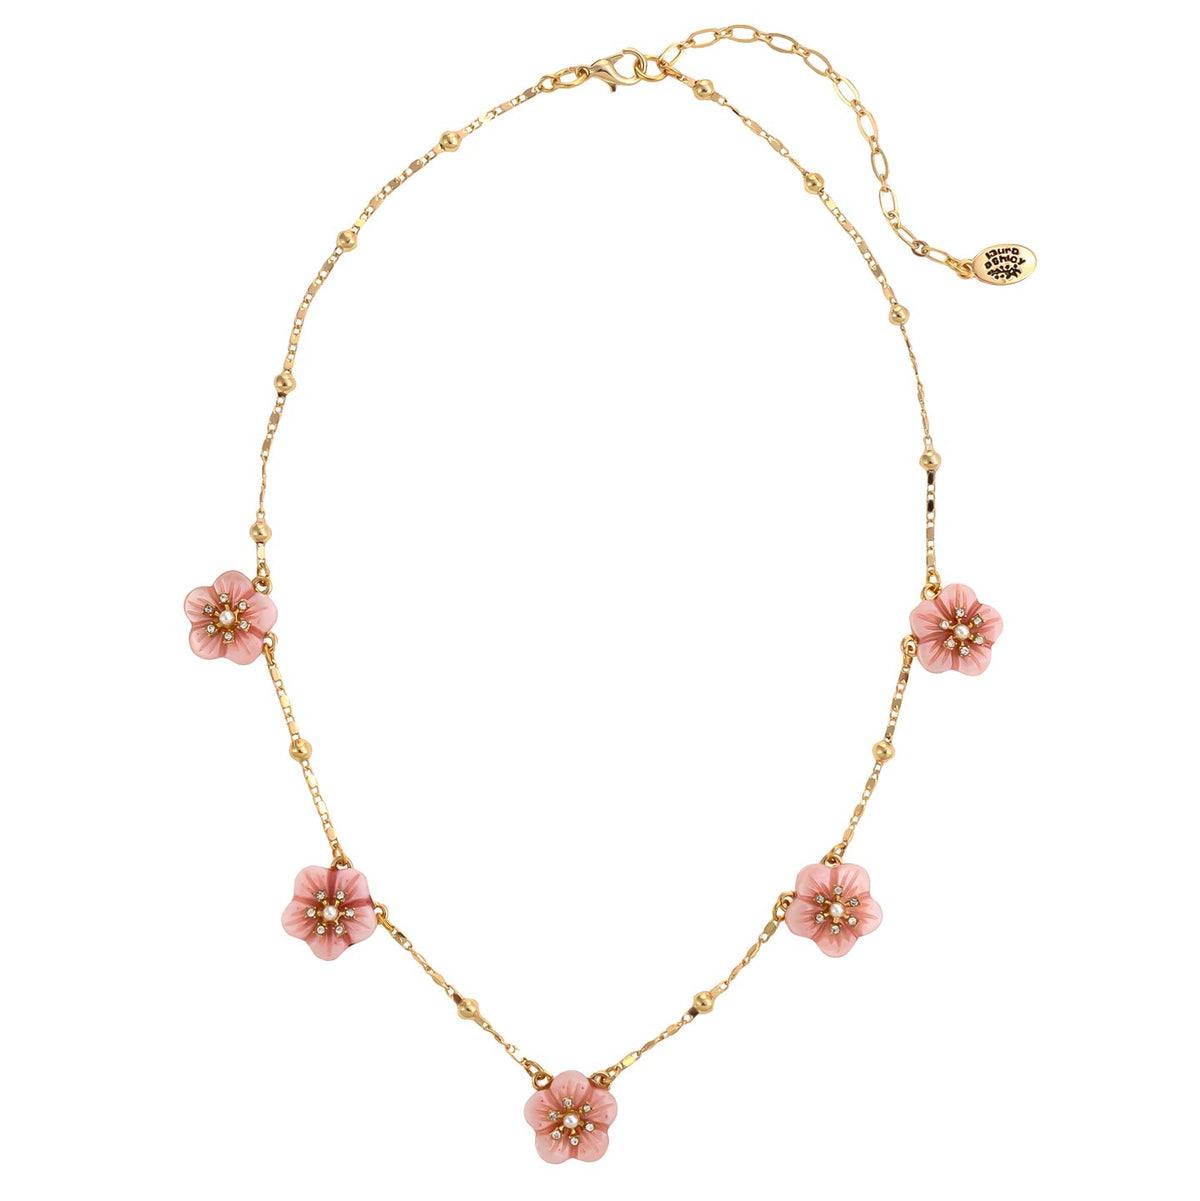 Laura Ashley - Delicate Floral Necklace